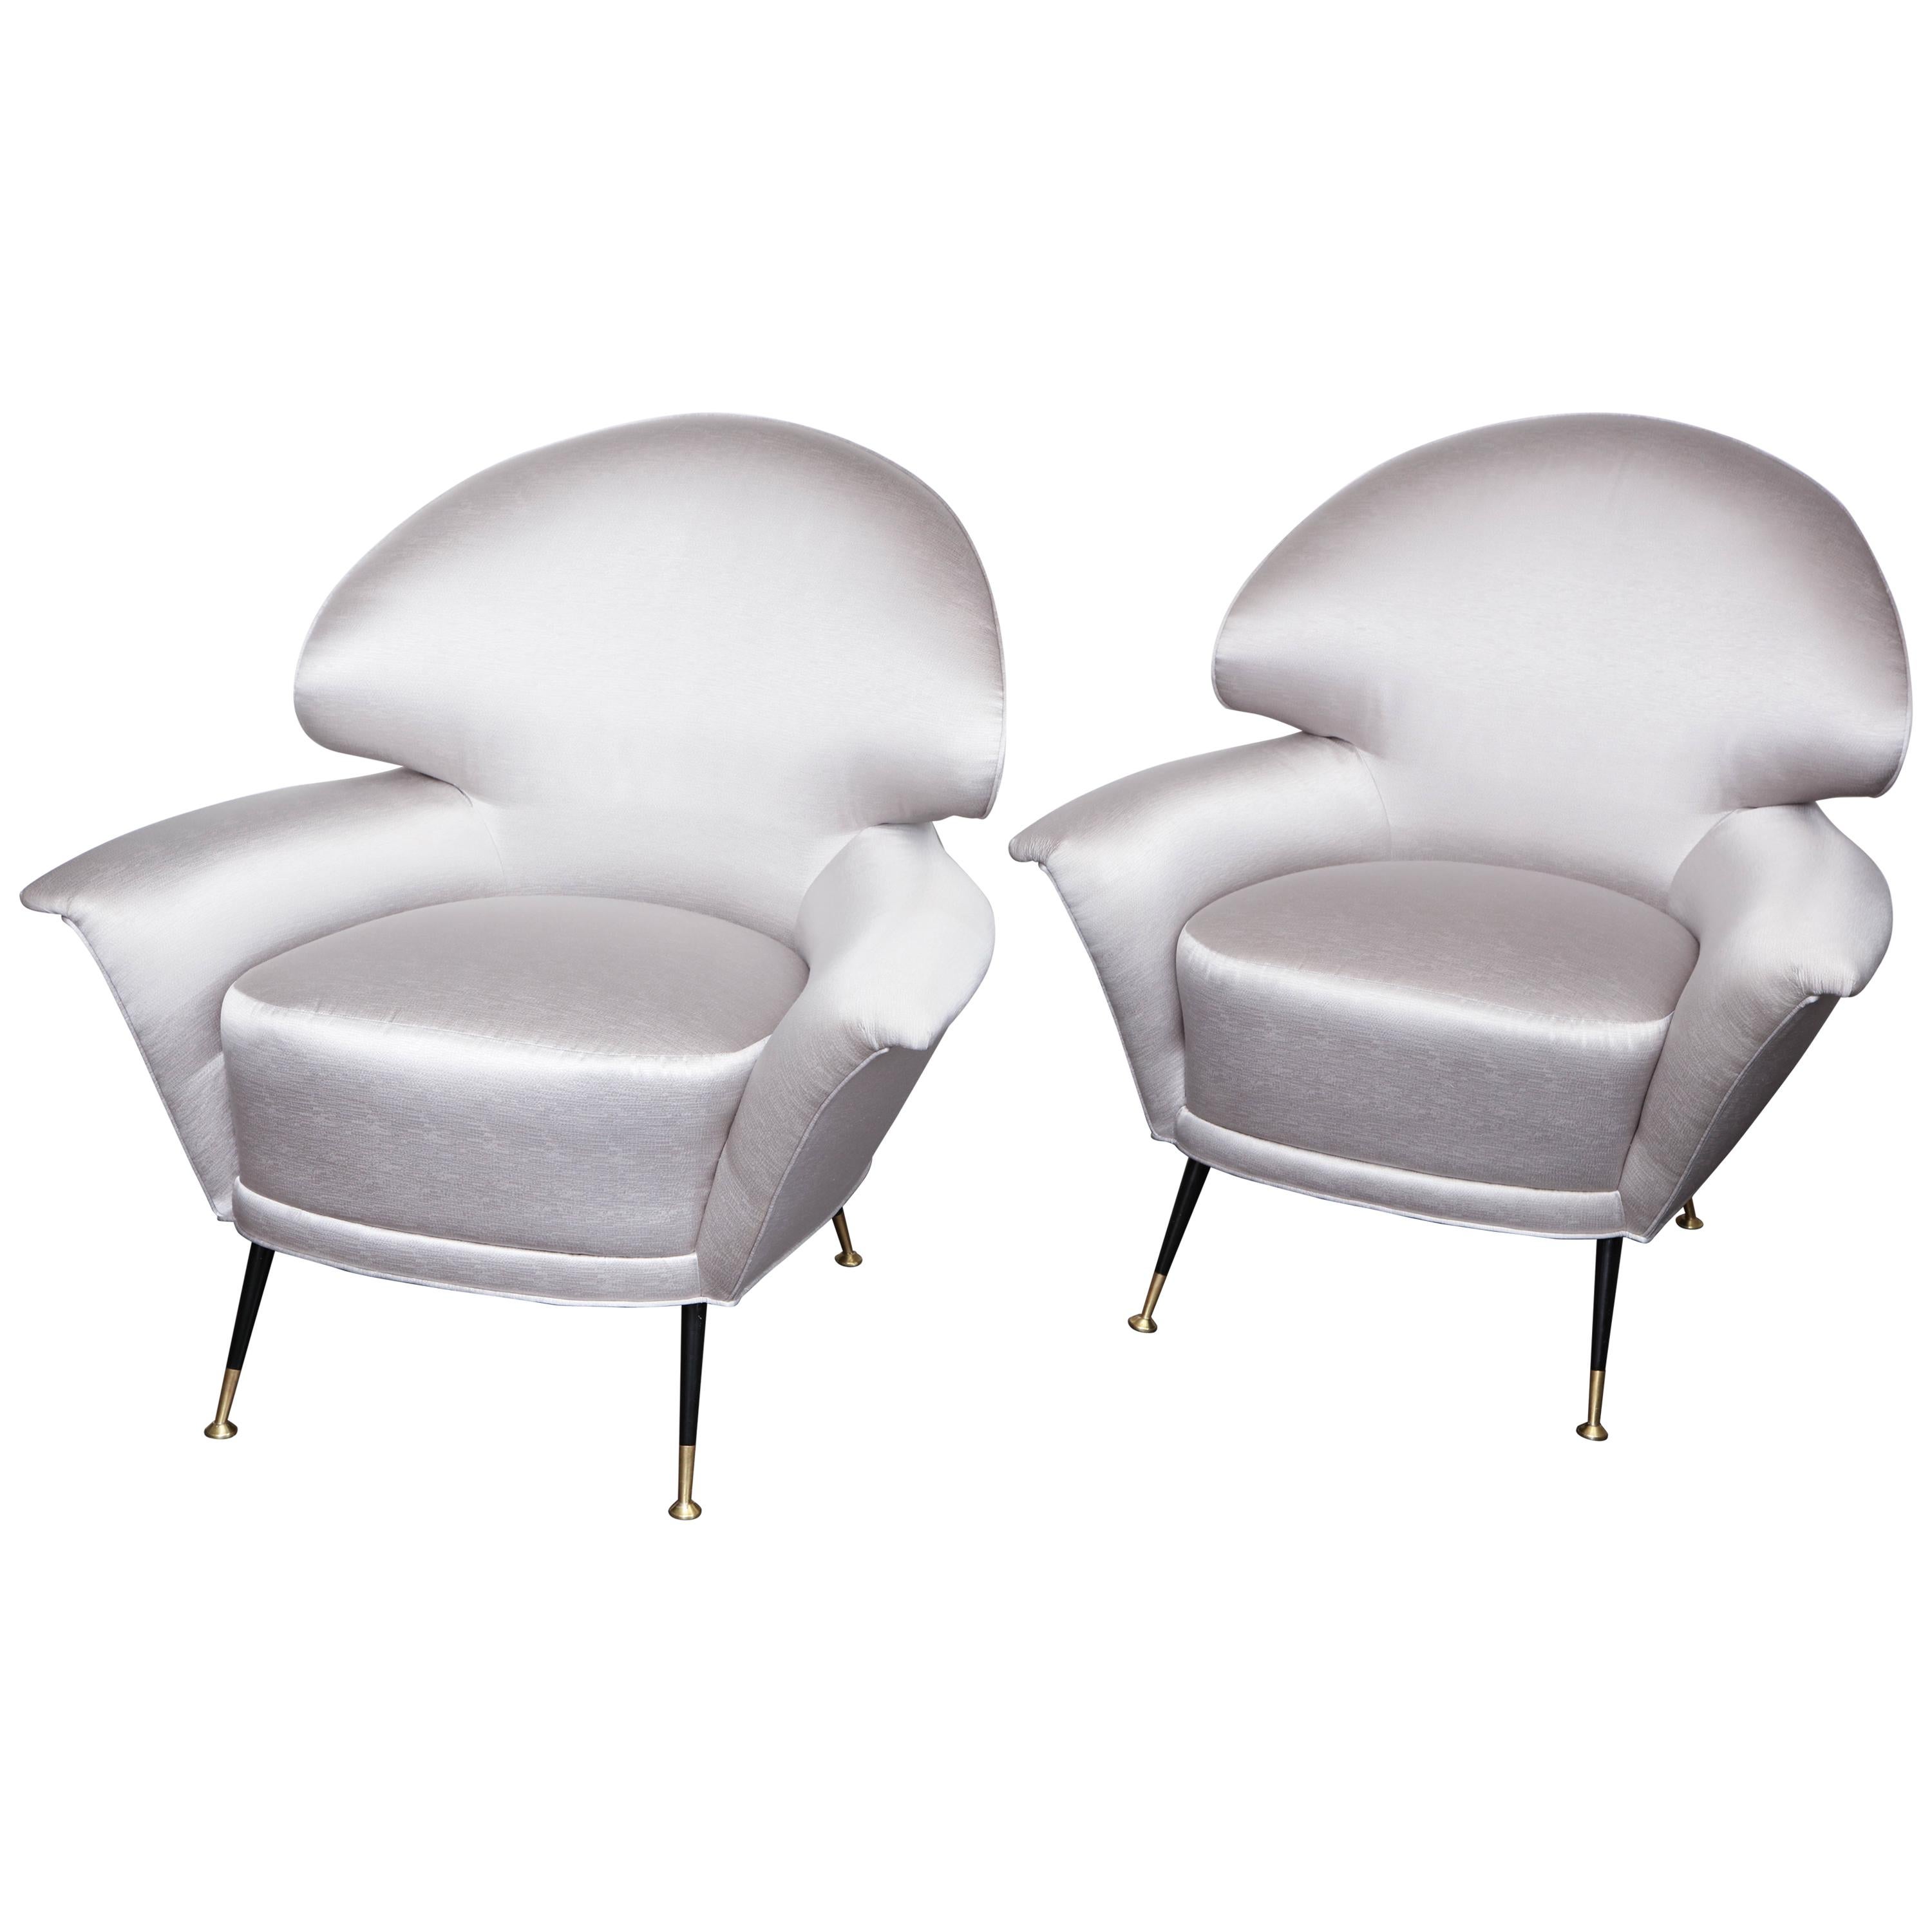 Pair of Vintage Italian Arrow Head Chairs Upholstered in Platinum Satin